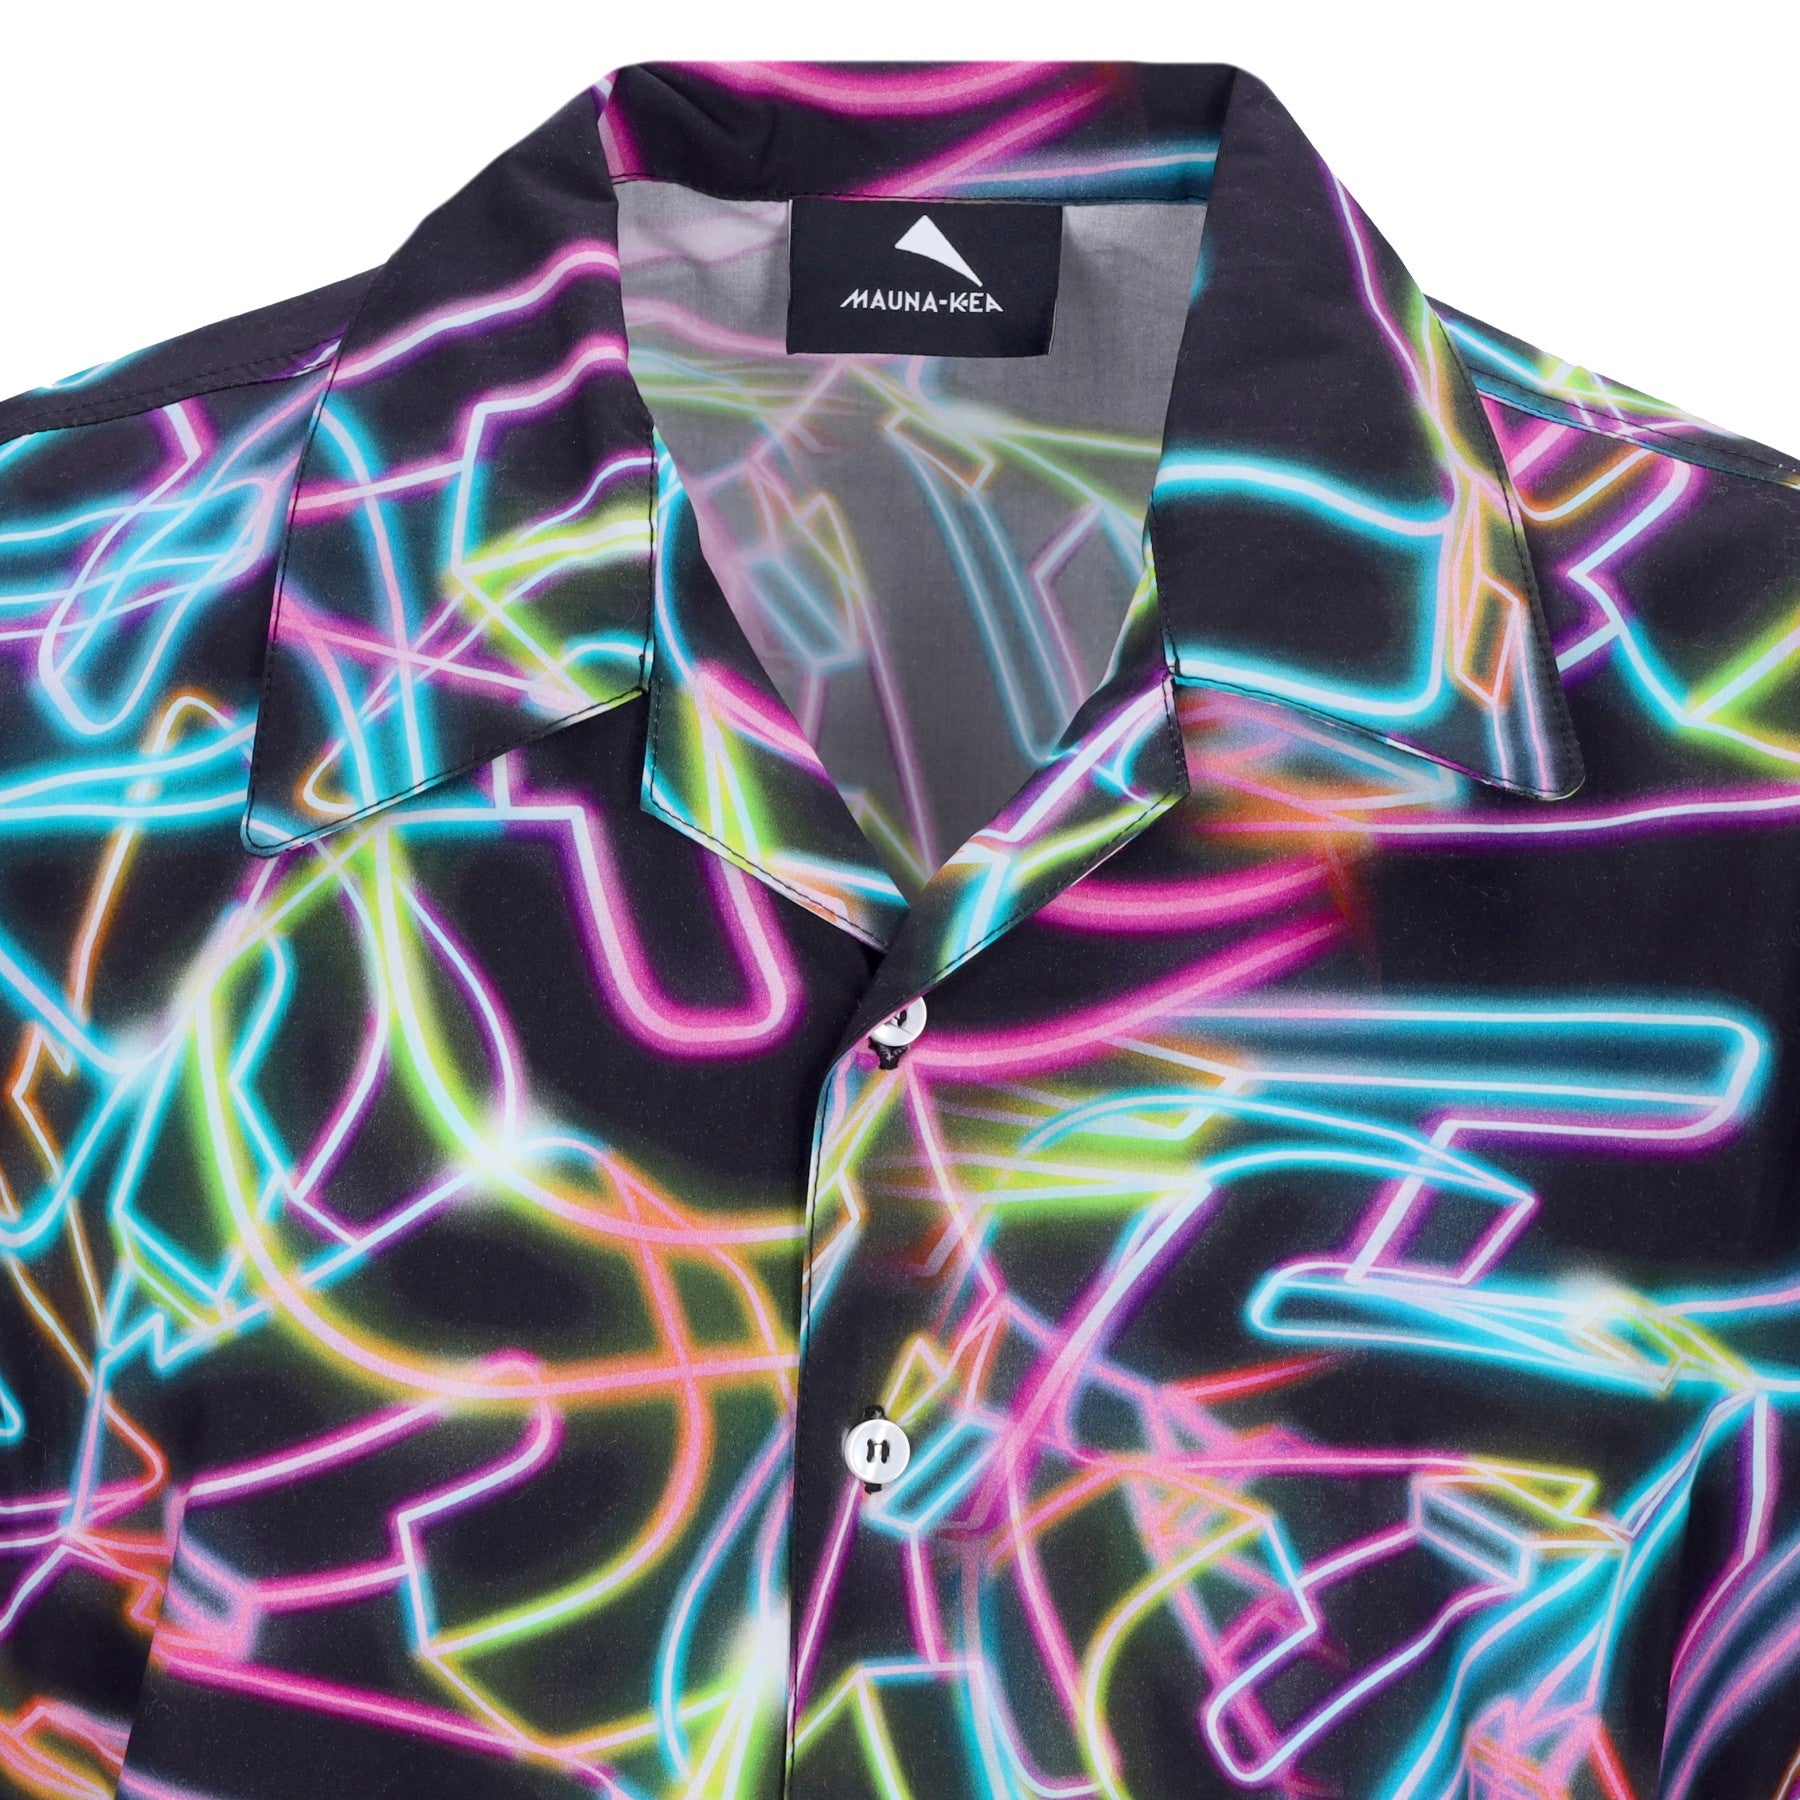 Mauna-kea, Camicia Manica Corta Uomo Neon Bowling Shirt X Triple J, 